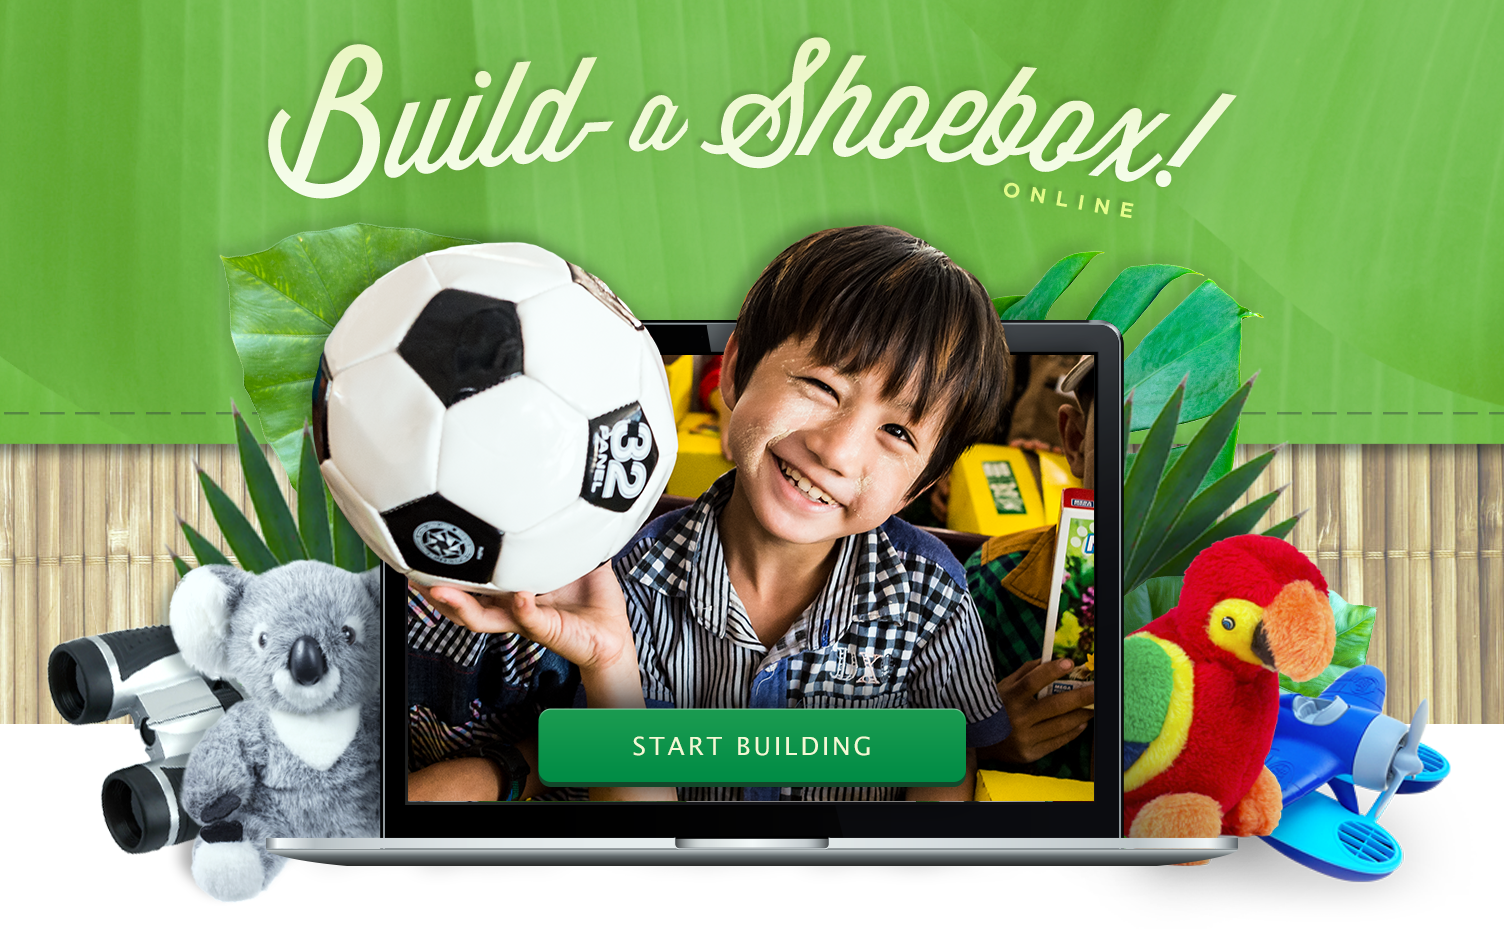 Start Building with Build a Shoebox Online